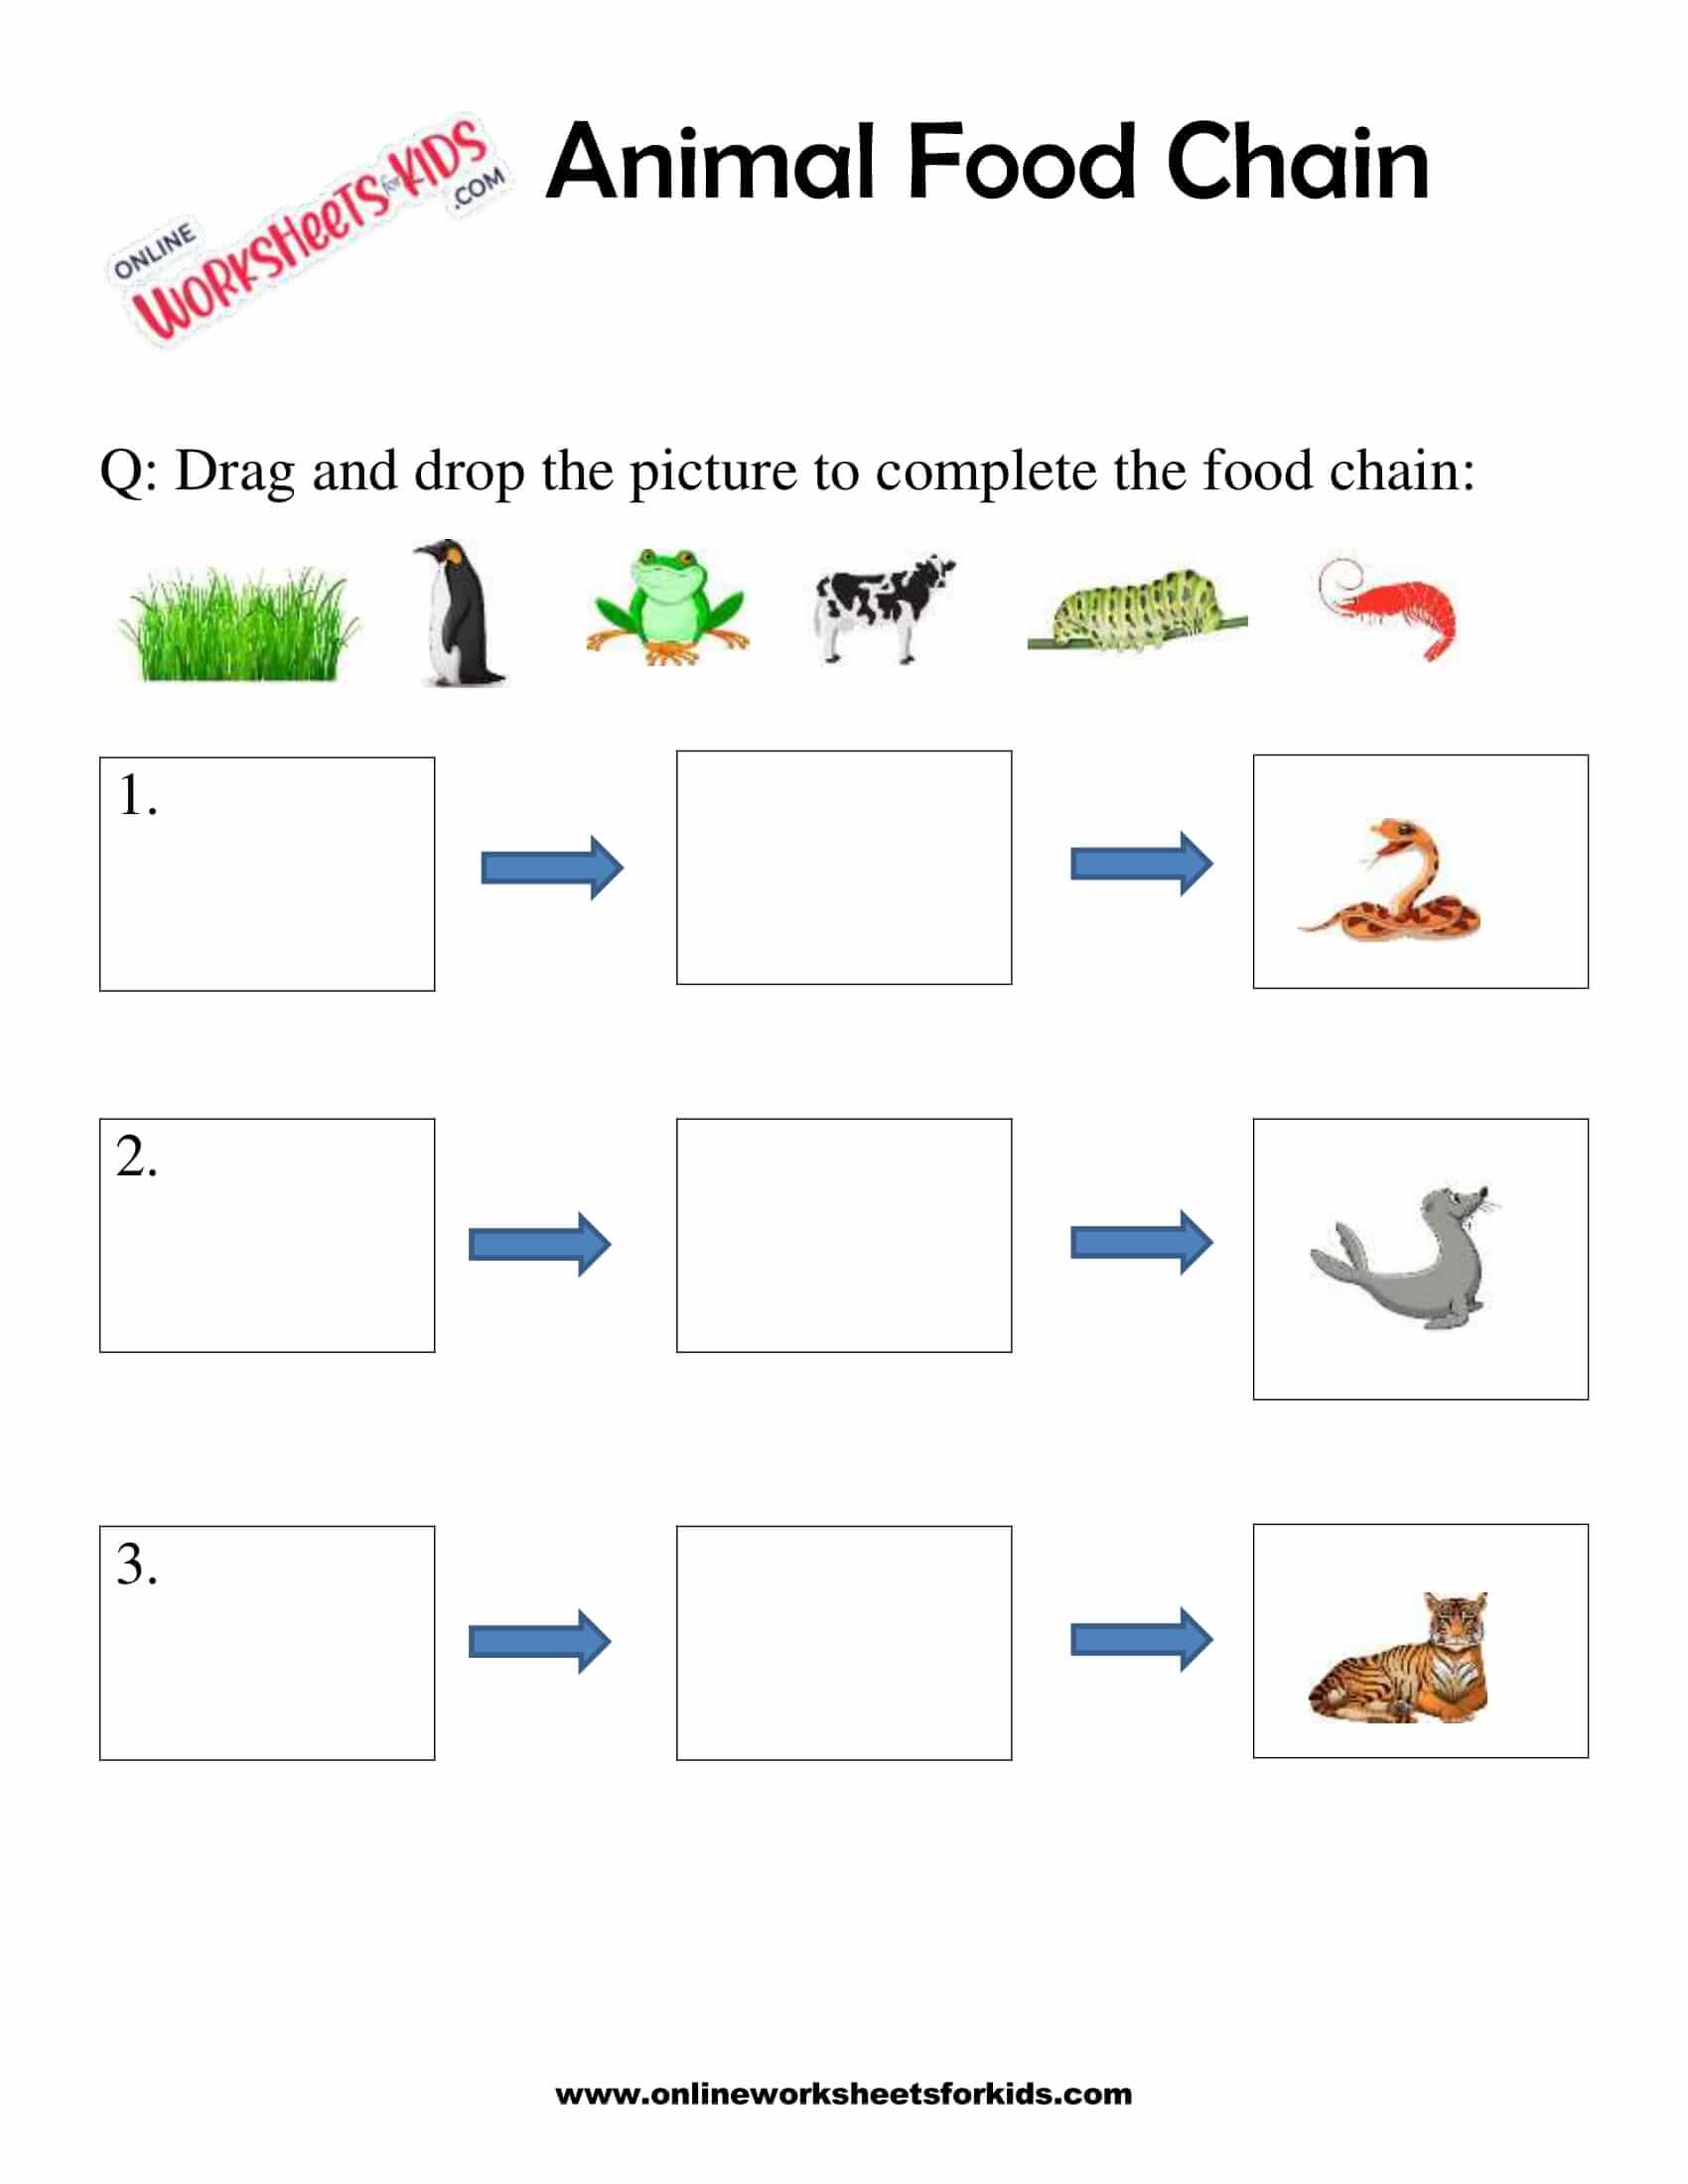 Animal Food Chain Worksheet For Grade 1-6